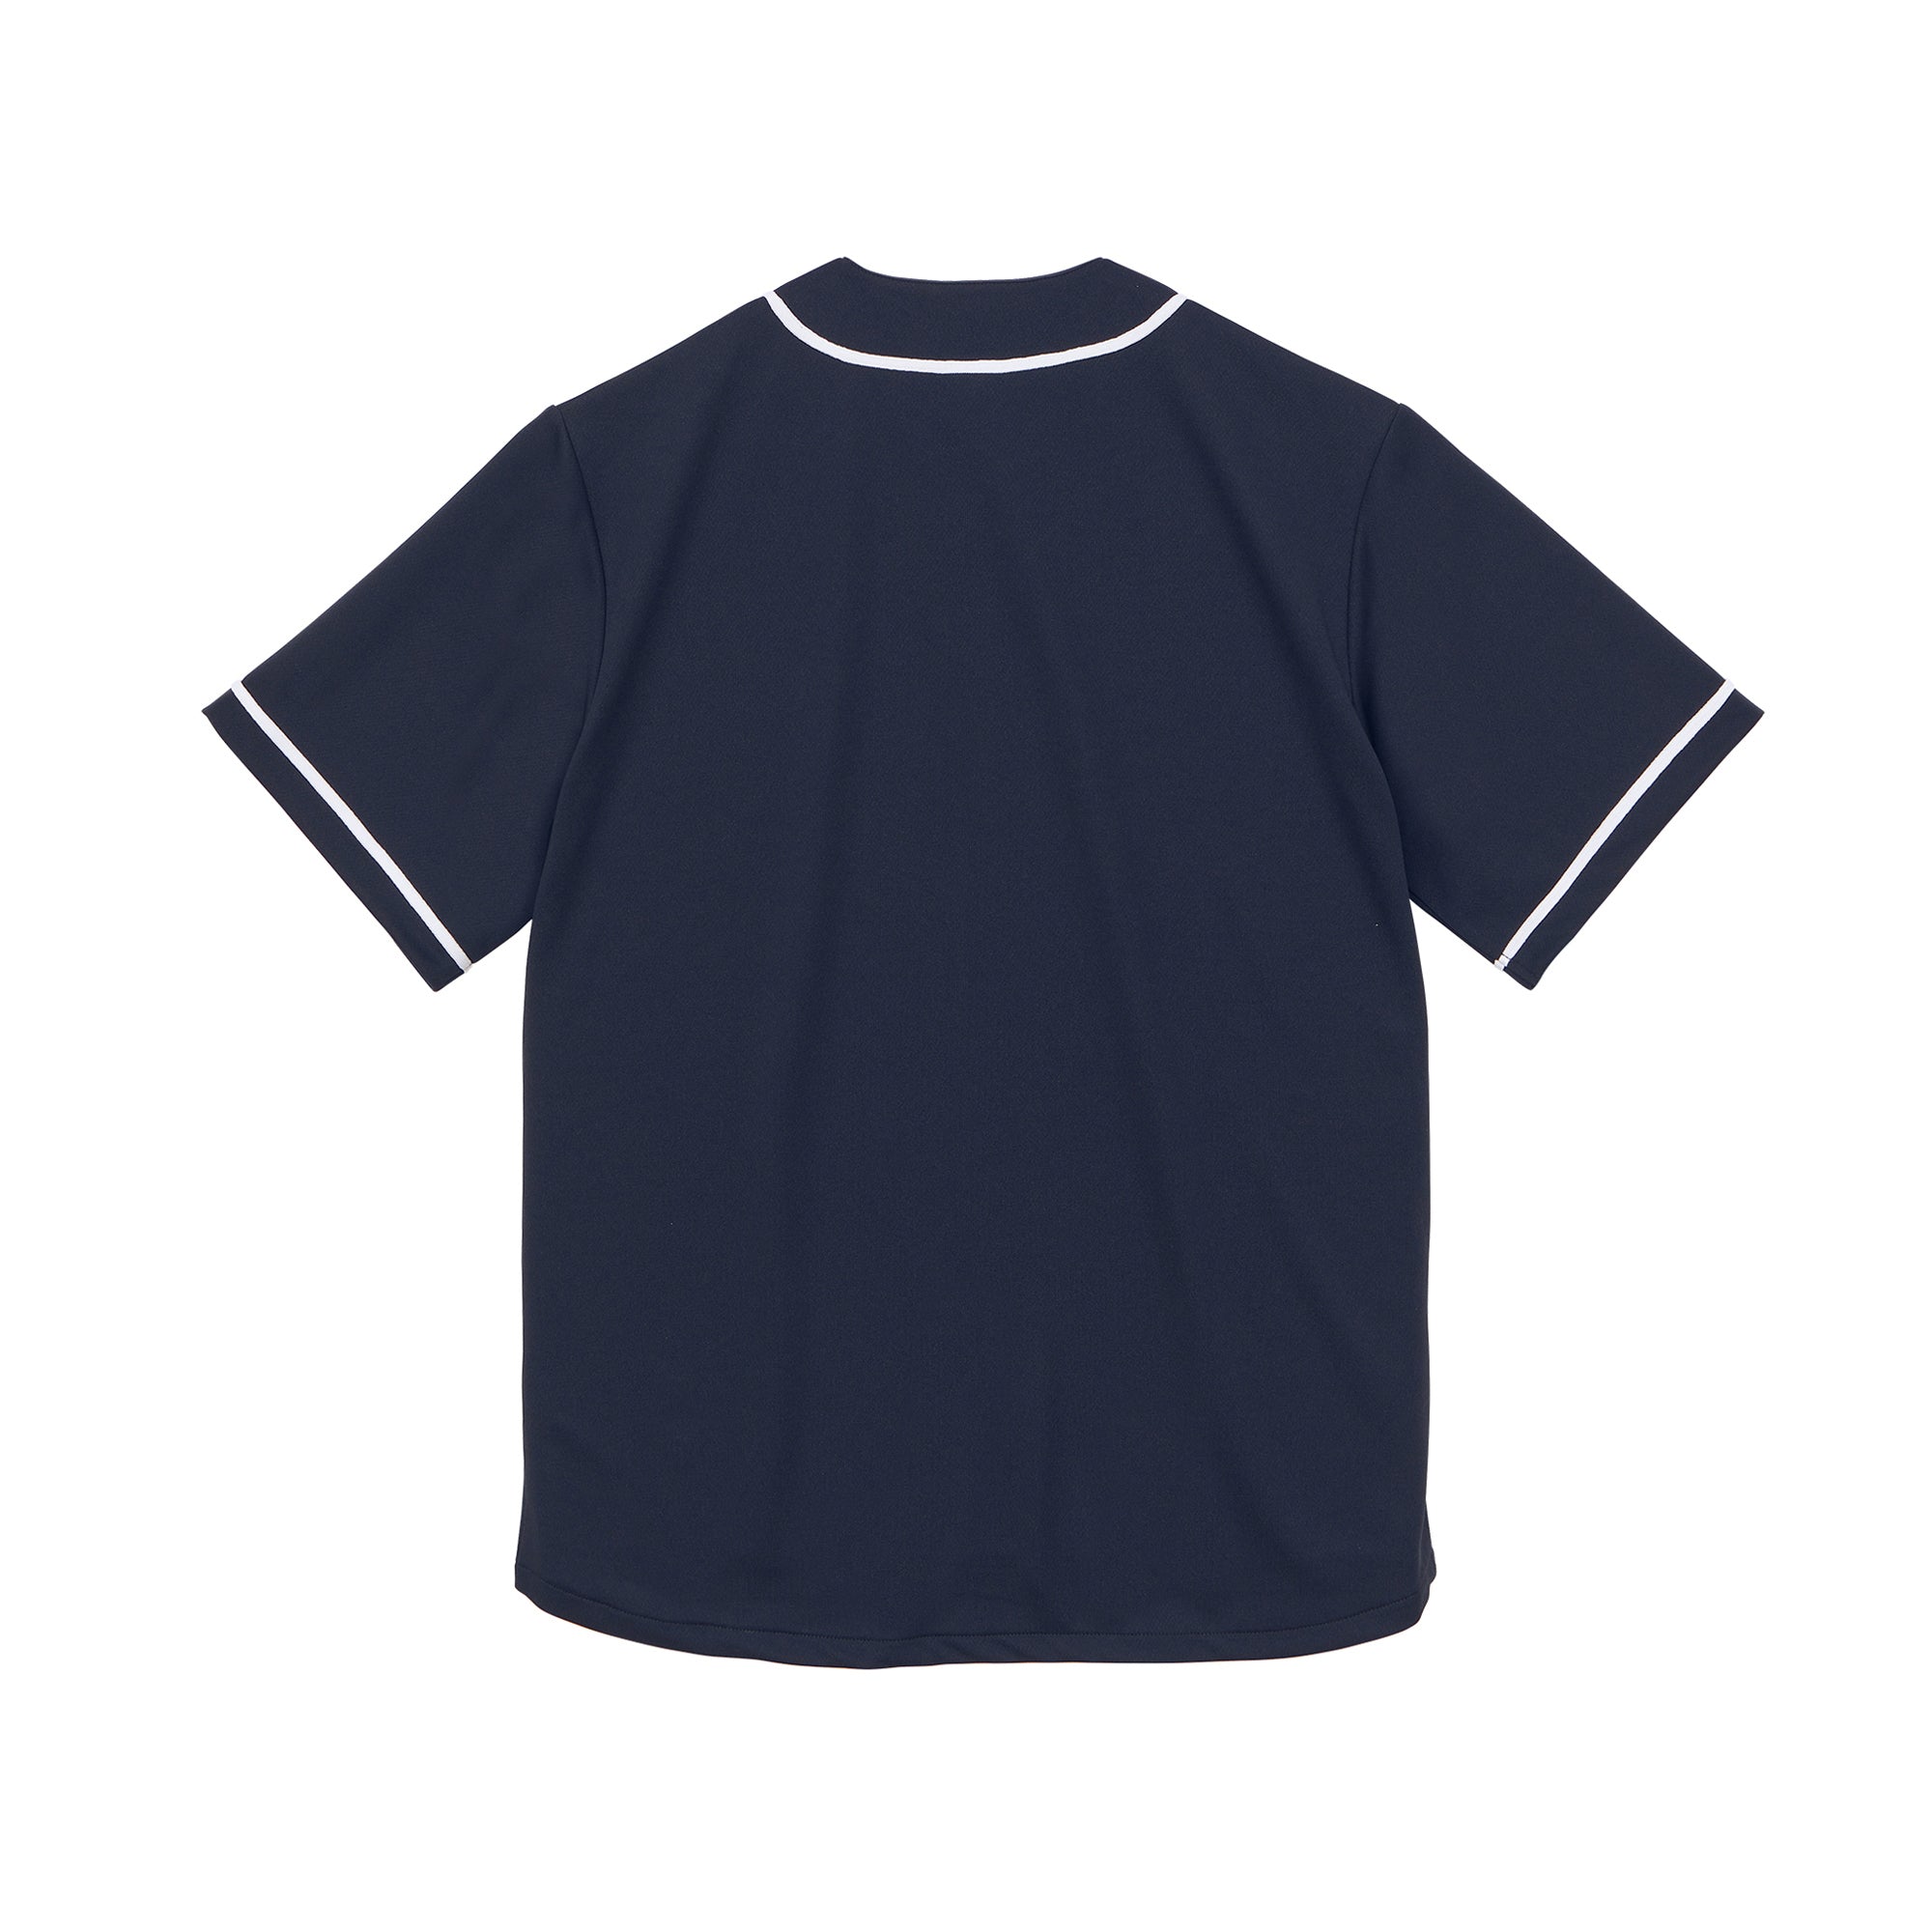 5982 - 4.1 Oz Dry Baseball Shirt - Navy/White x 2